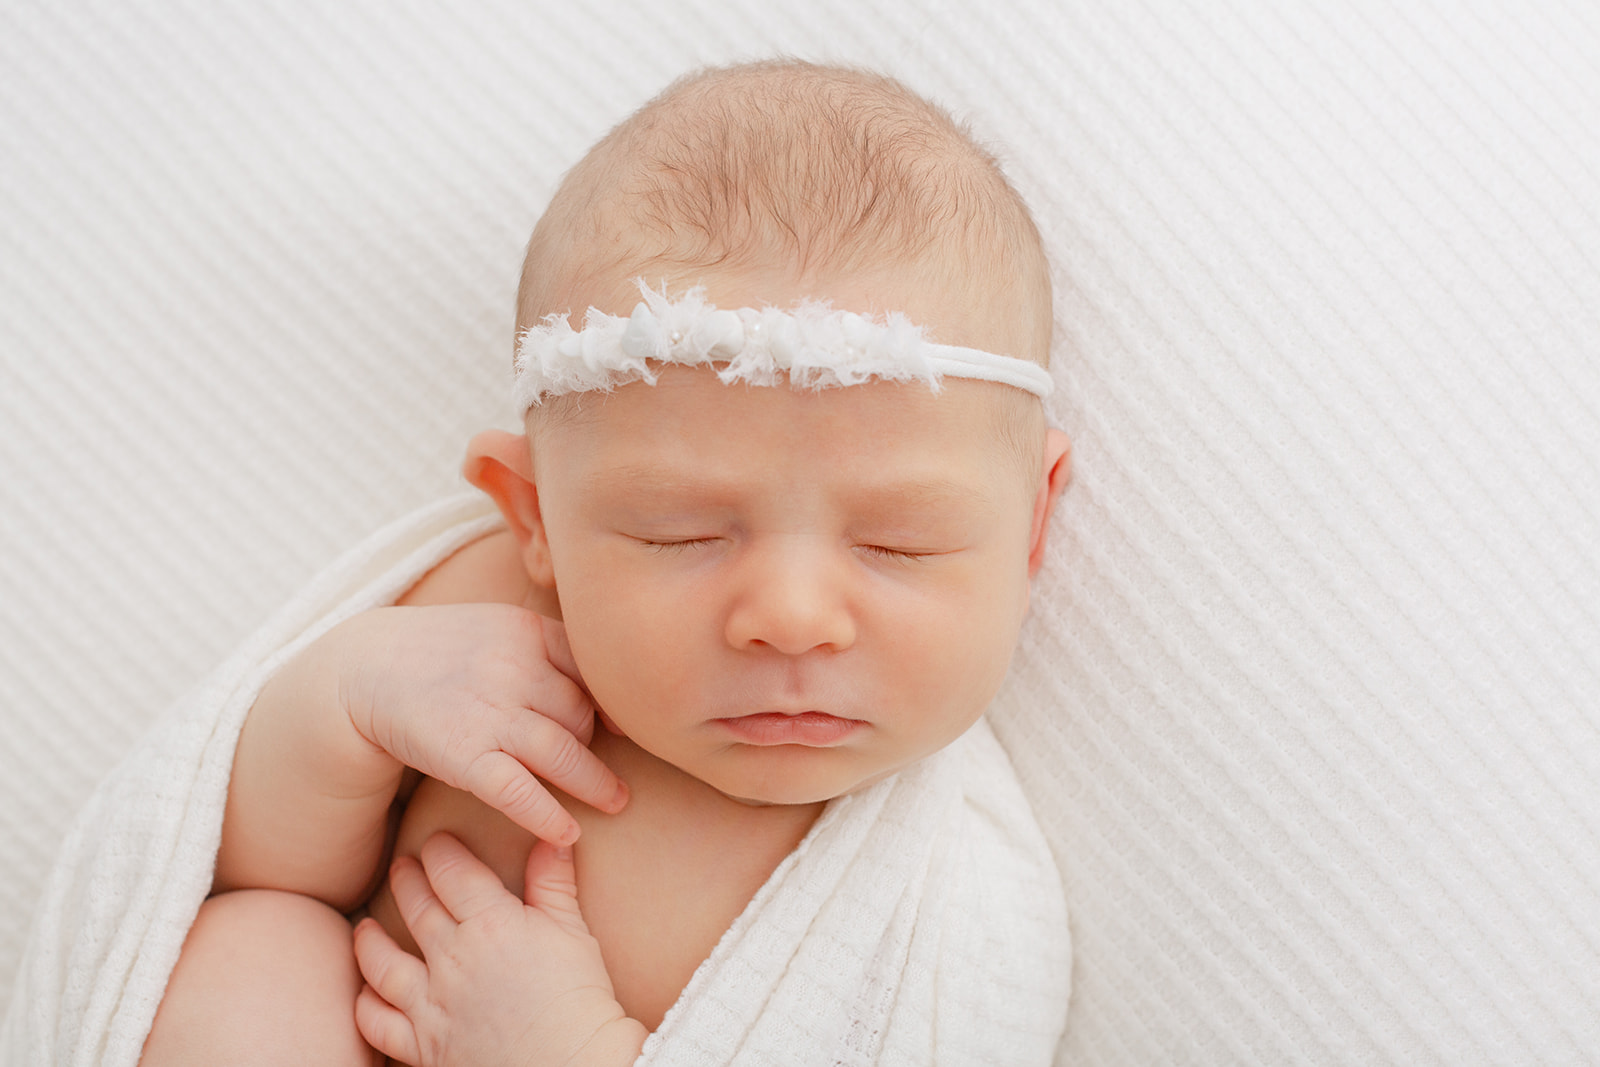 A newborn baby sleeps in a white headband in a studio